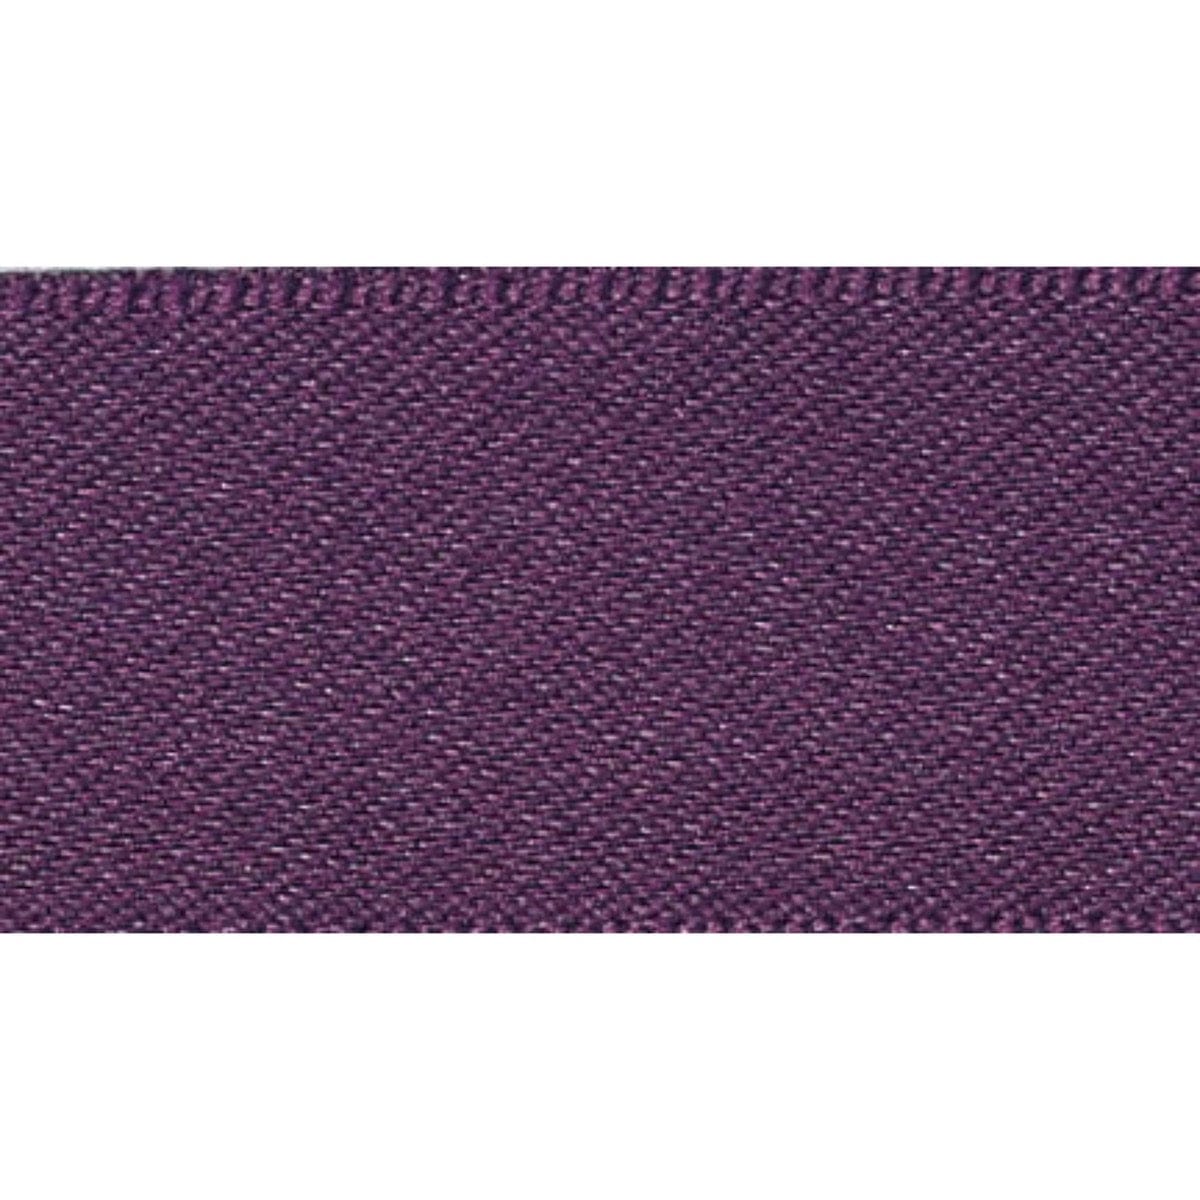 Double Faced Satin Ribbon: Blackberry Purple: 25mm wide. Price per metre.